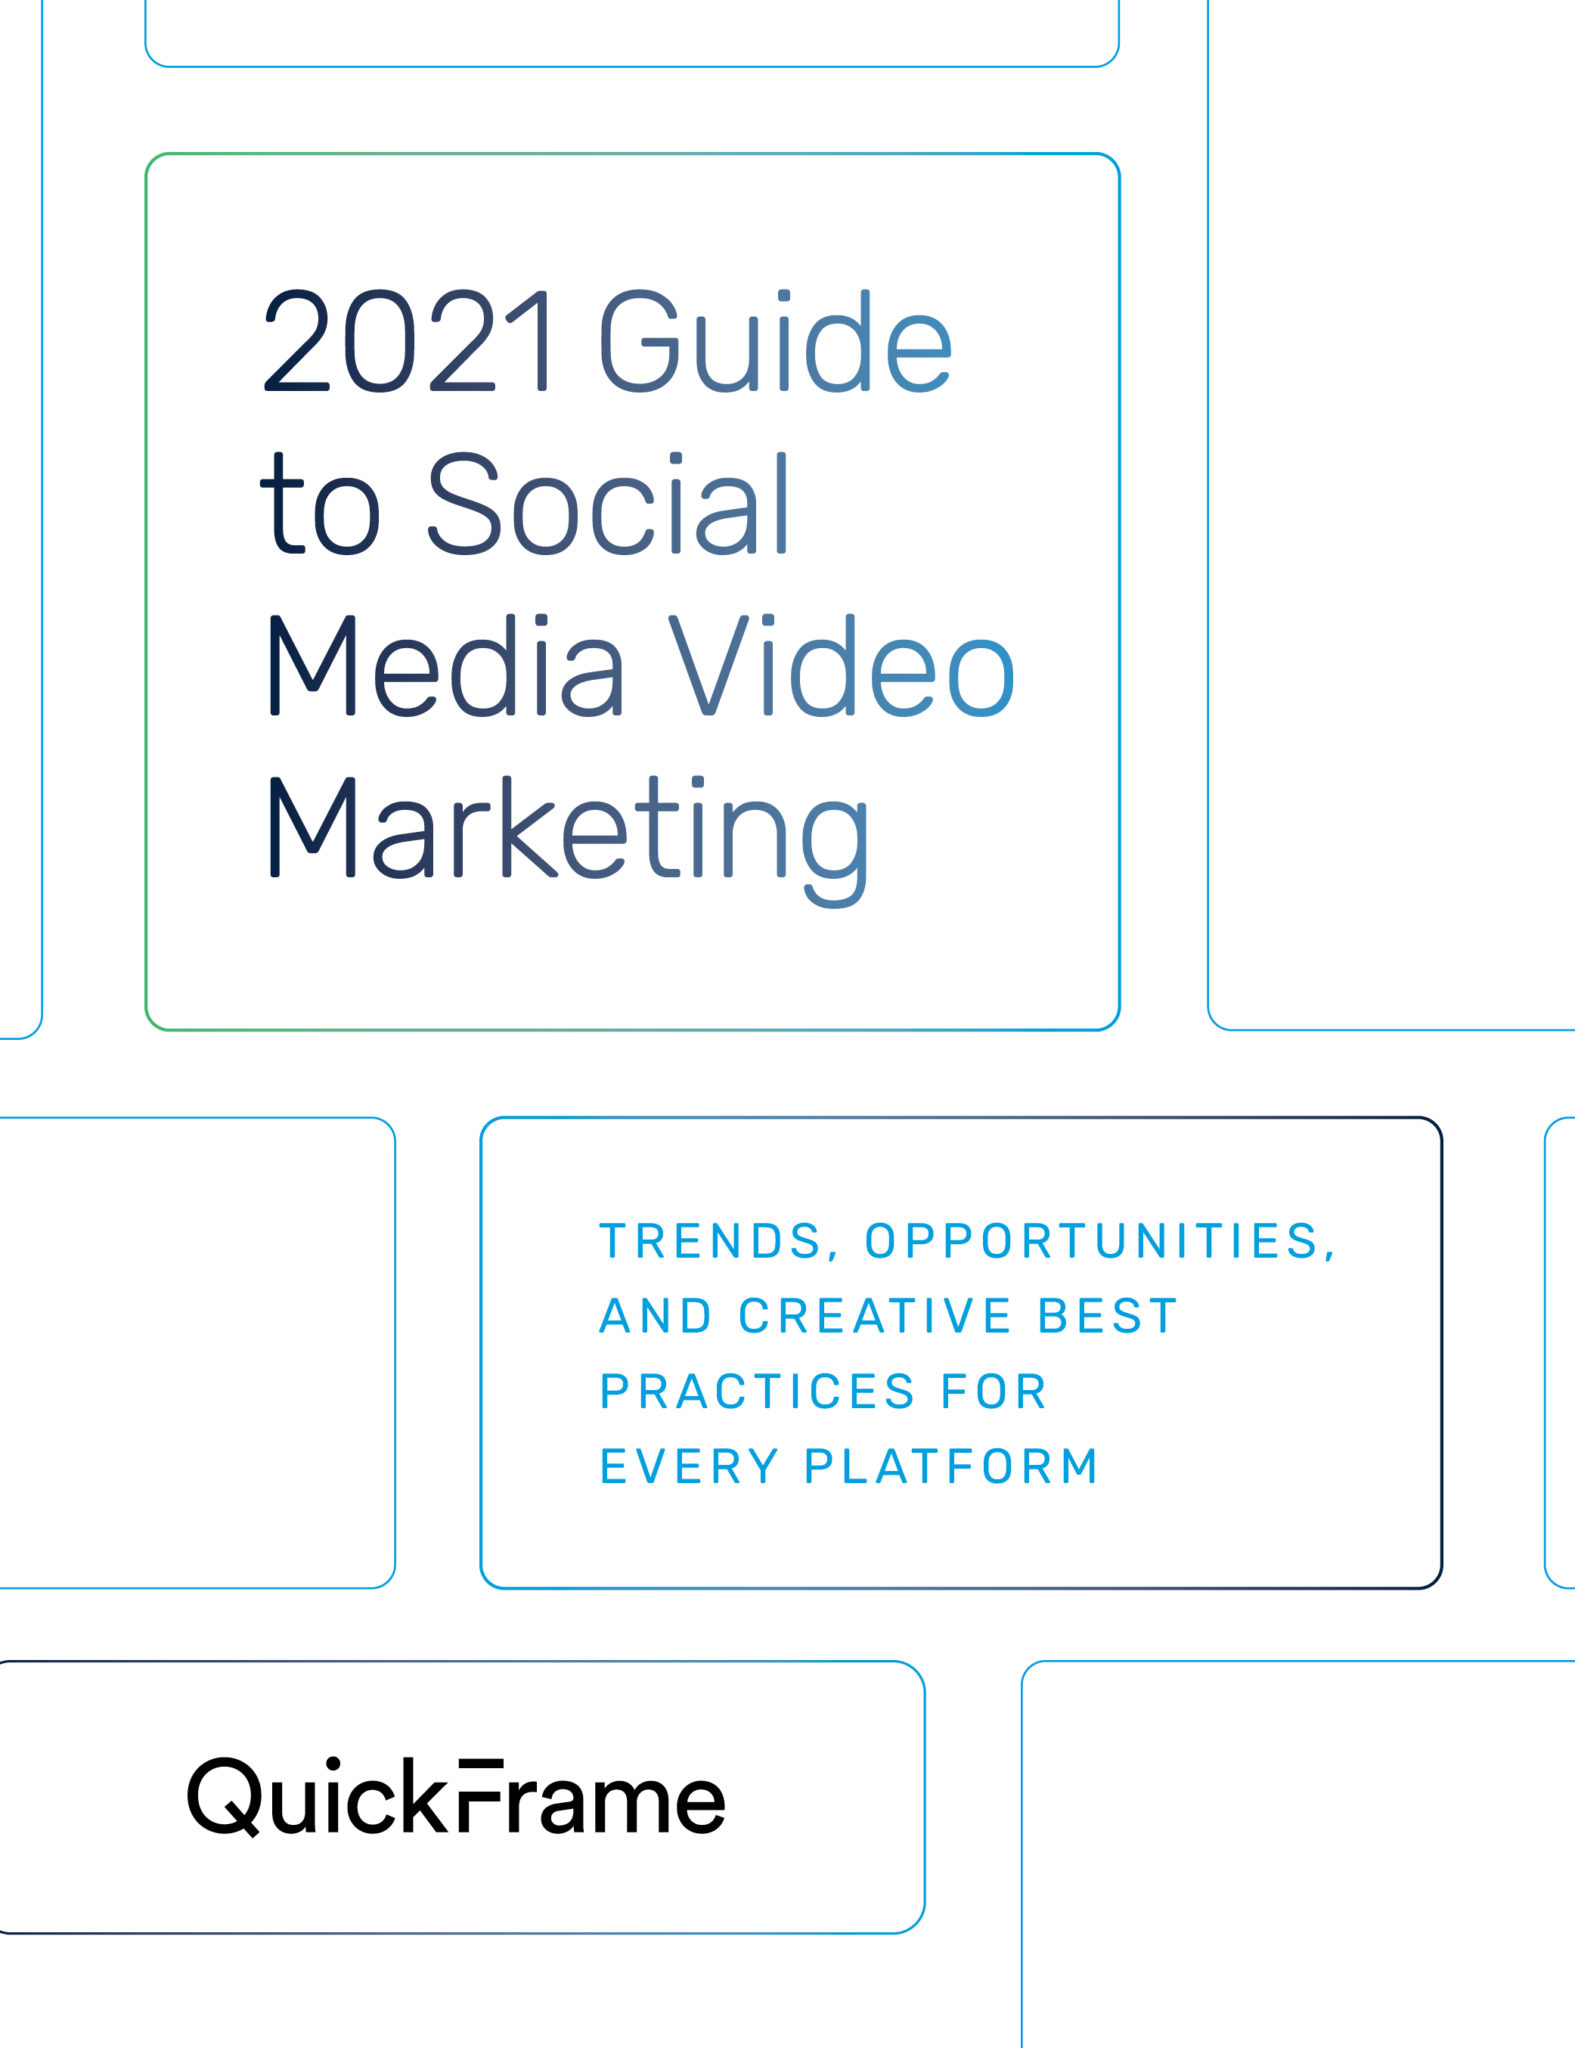 2021 Guide to Social Media Video Marketing